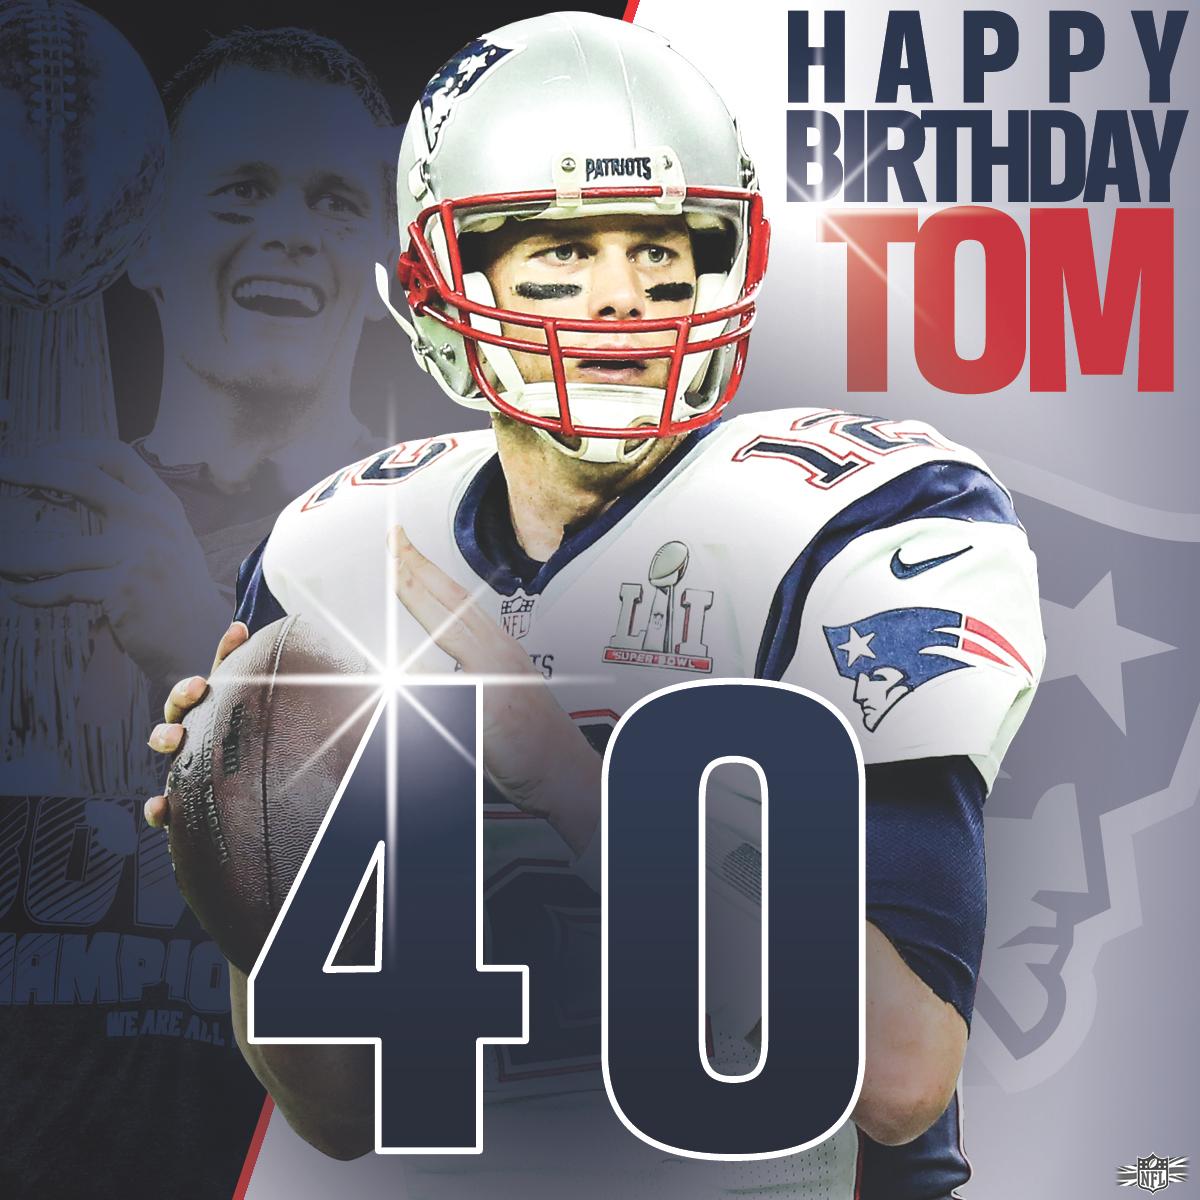 5 x Super Bowl Champion
4 x Super Bowl MVP
2 x NFL MVP

Happy 4  0  th Birthday, Tom Brady 